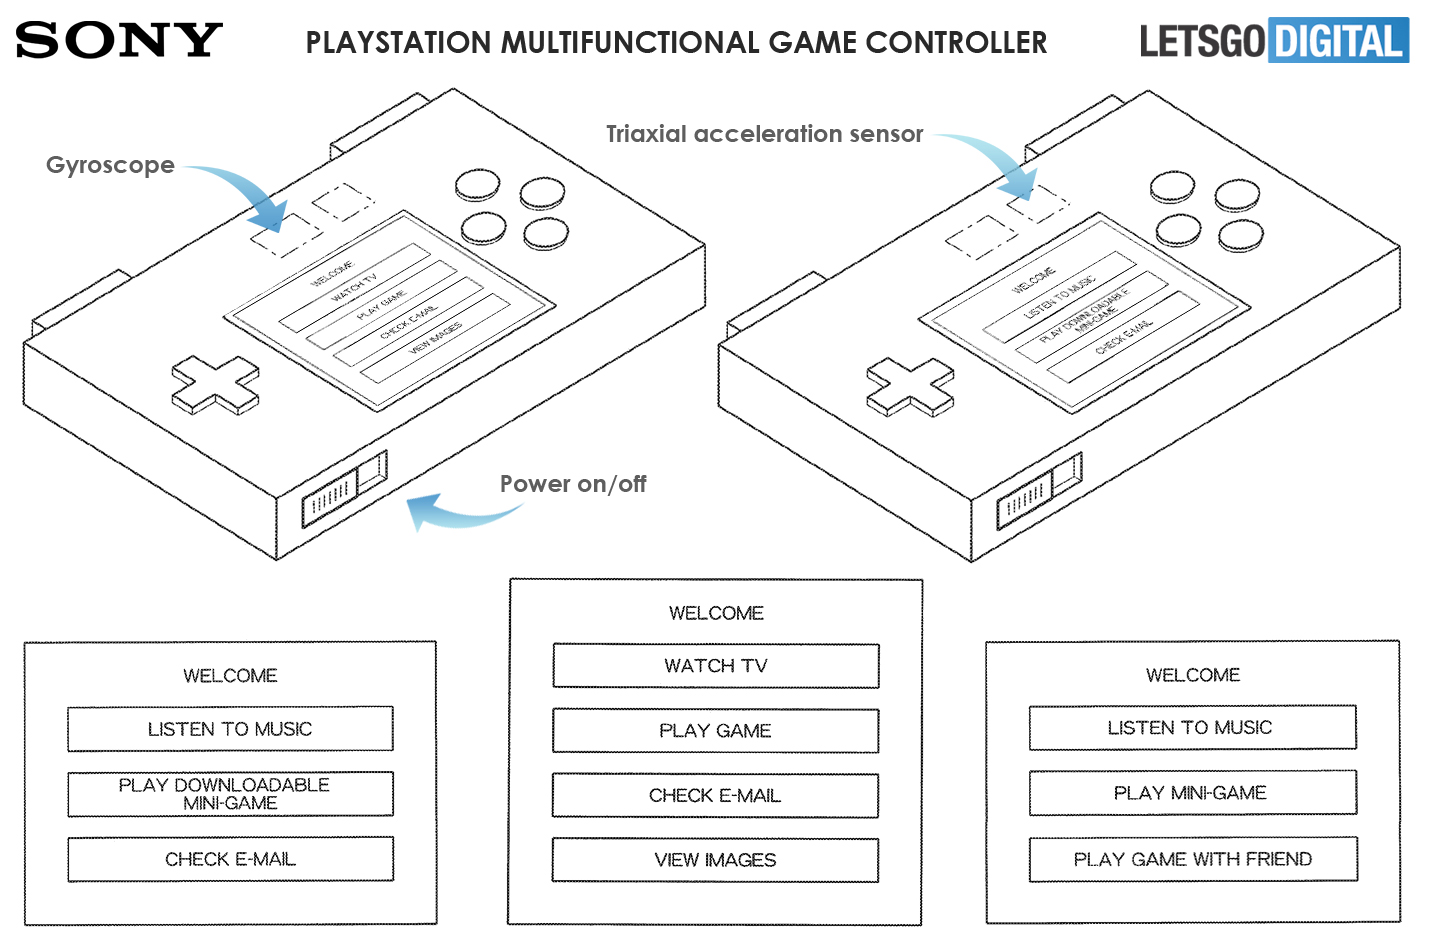 Multifunctional game controller